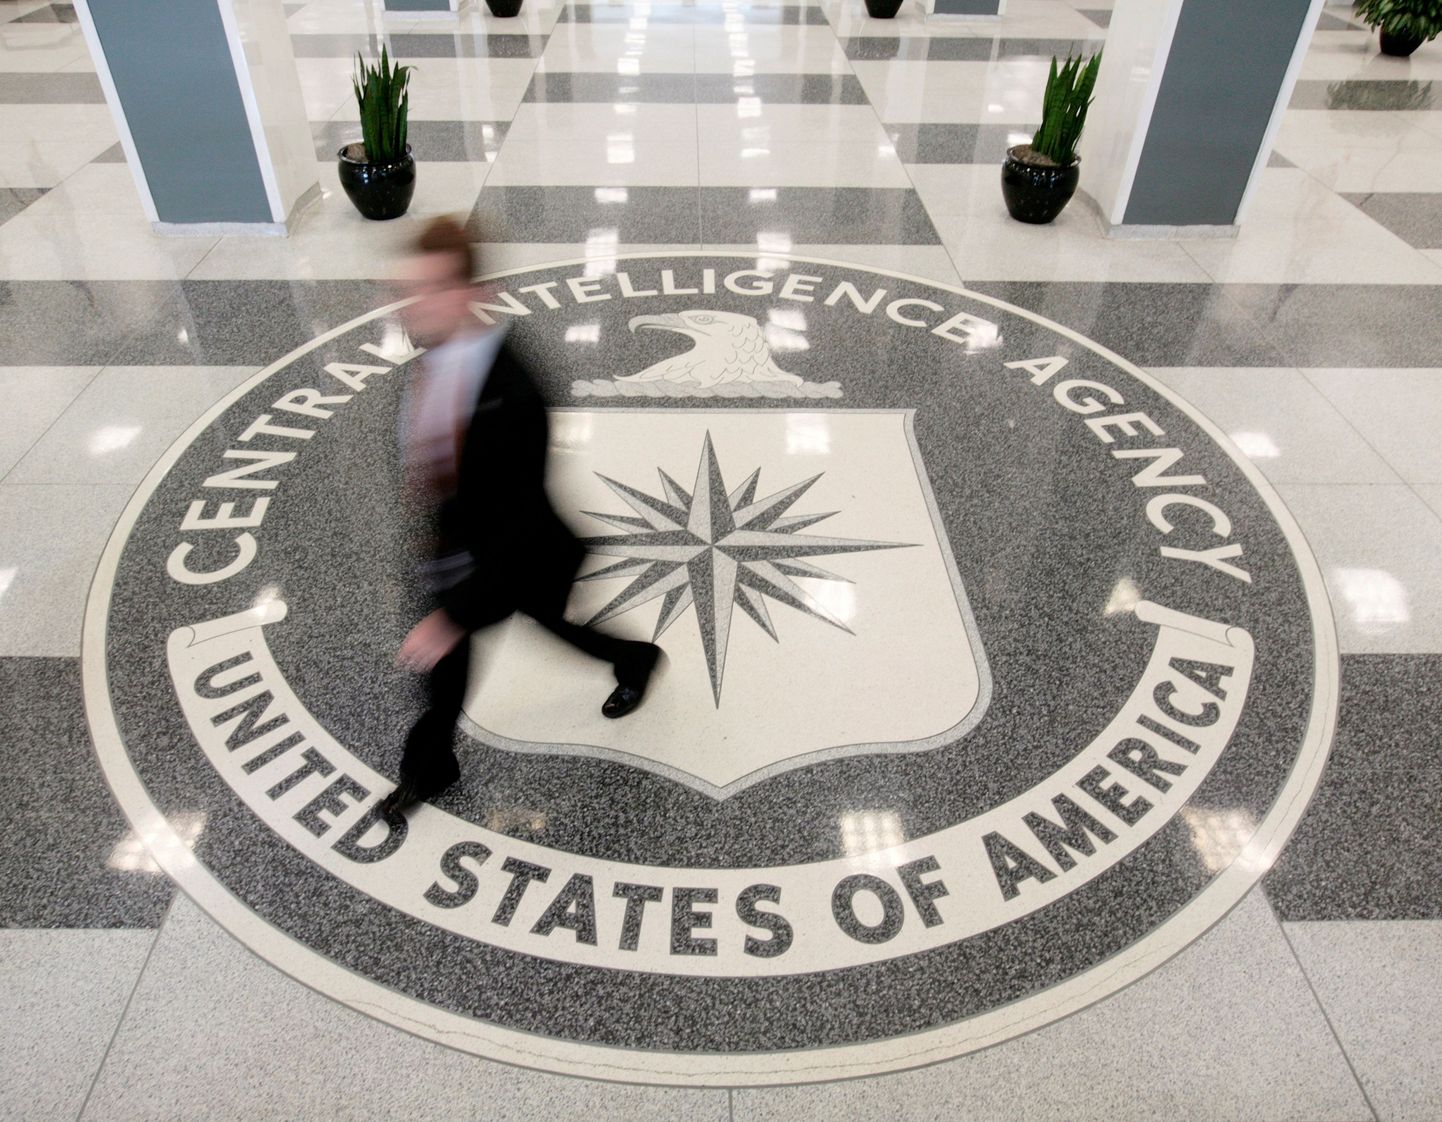 Логотип ЦРУ. Иллюстративное фото.